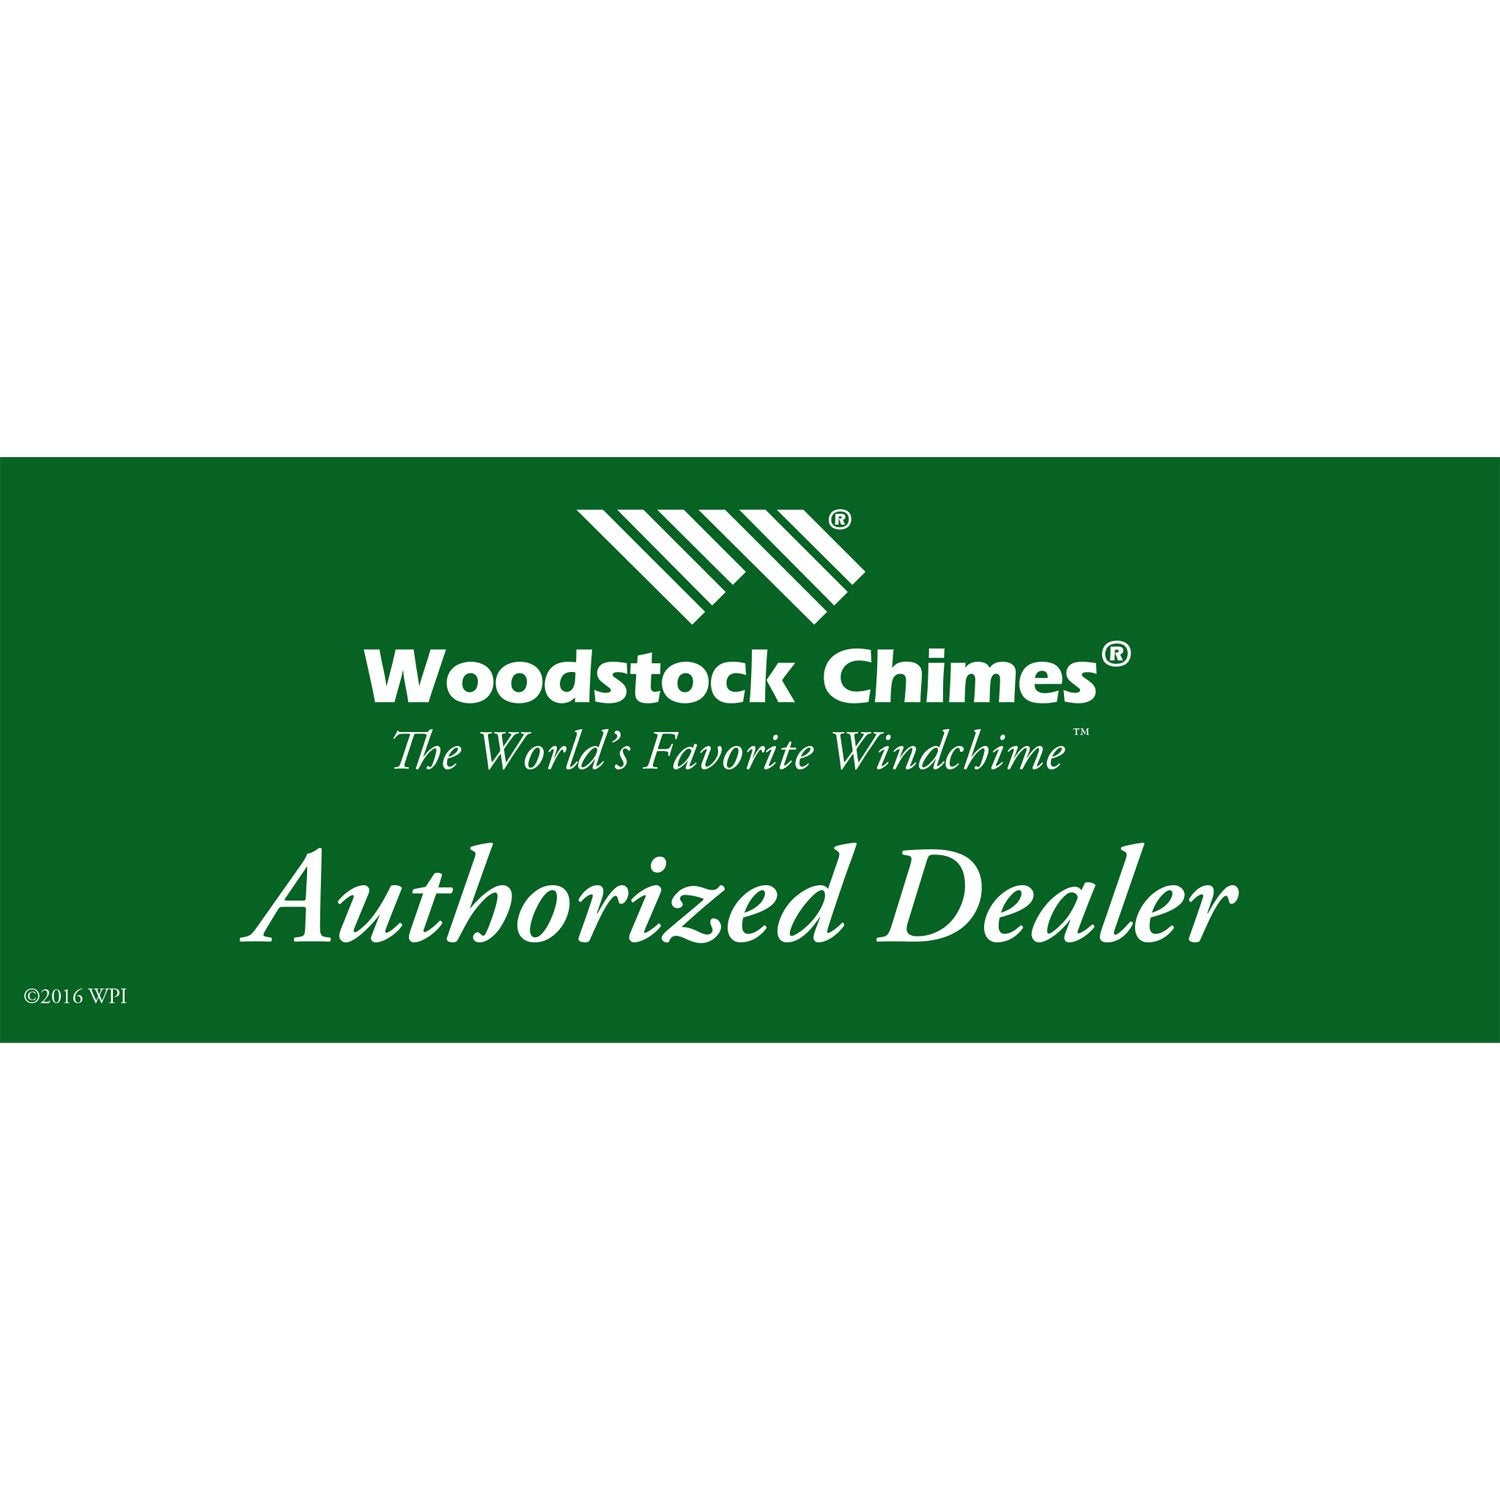 Authorized Dealer Window Cling Sign alt image